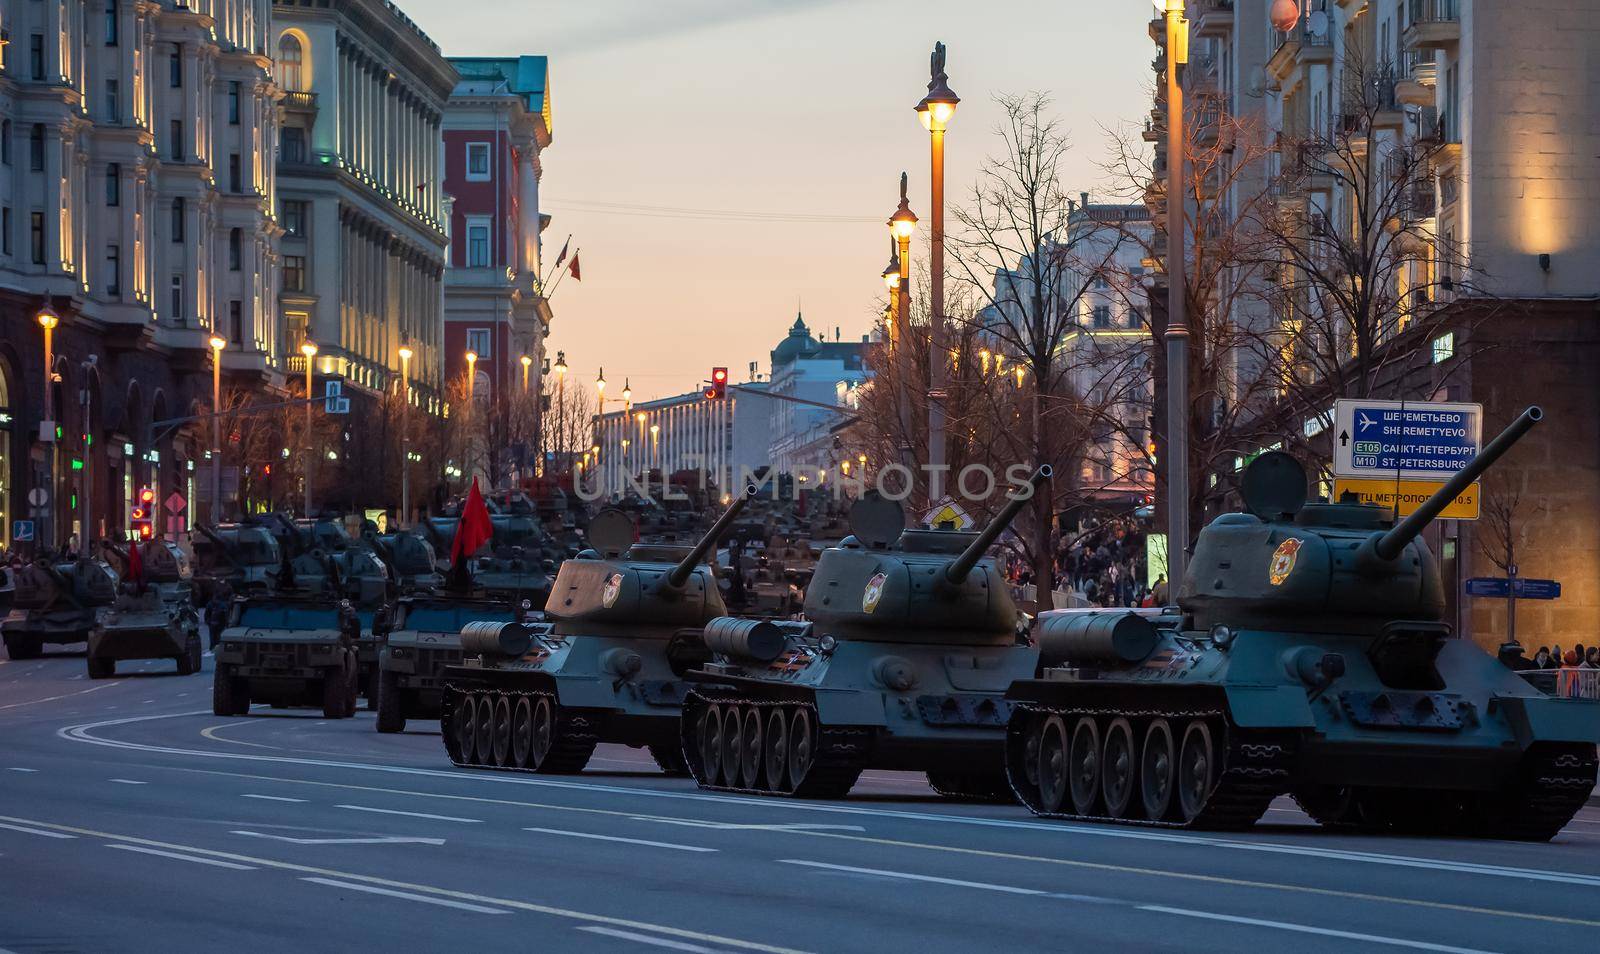 April 30, 2021 Moscow, Russia. Soviet medium tank of the World War II period T-34-85 on Tverskaya Street in Moscow.